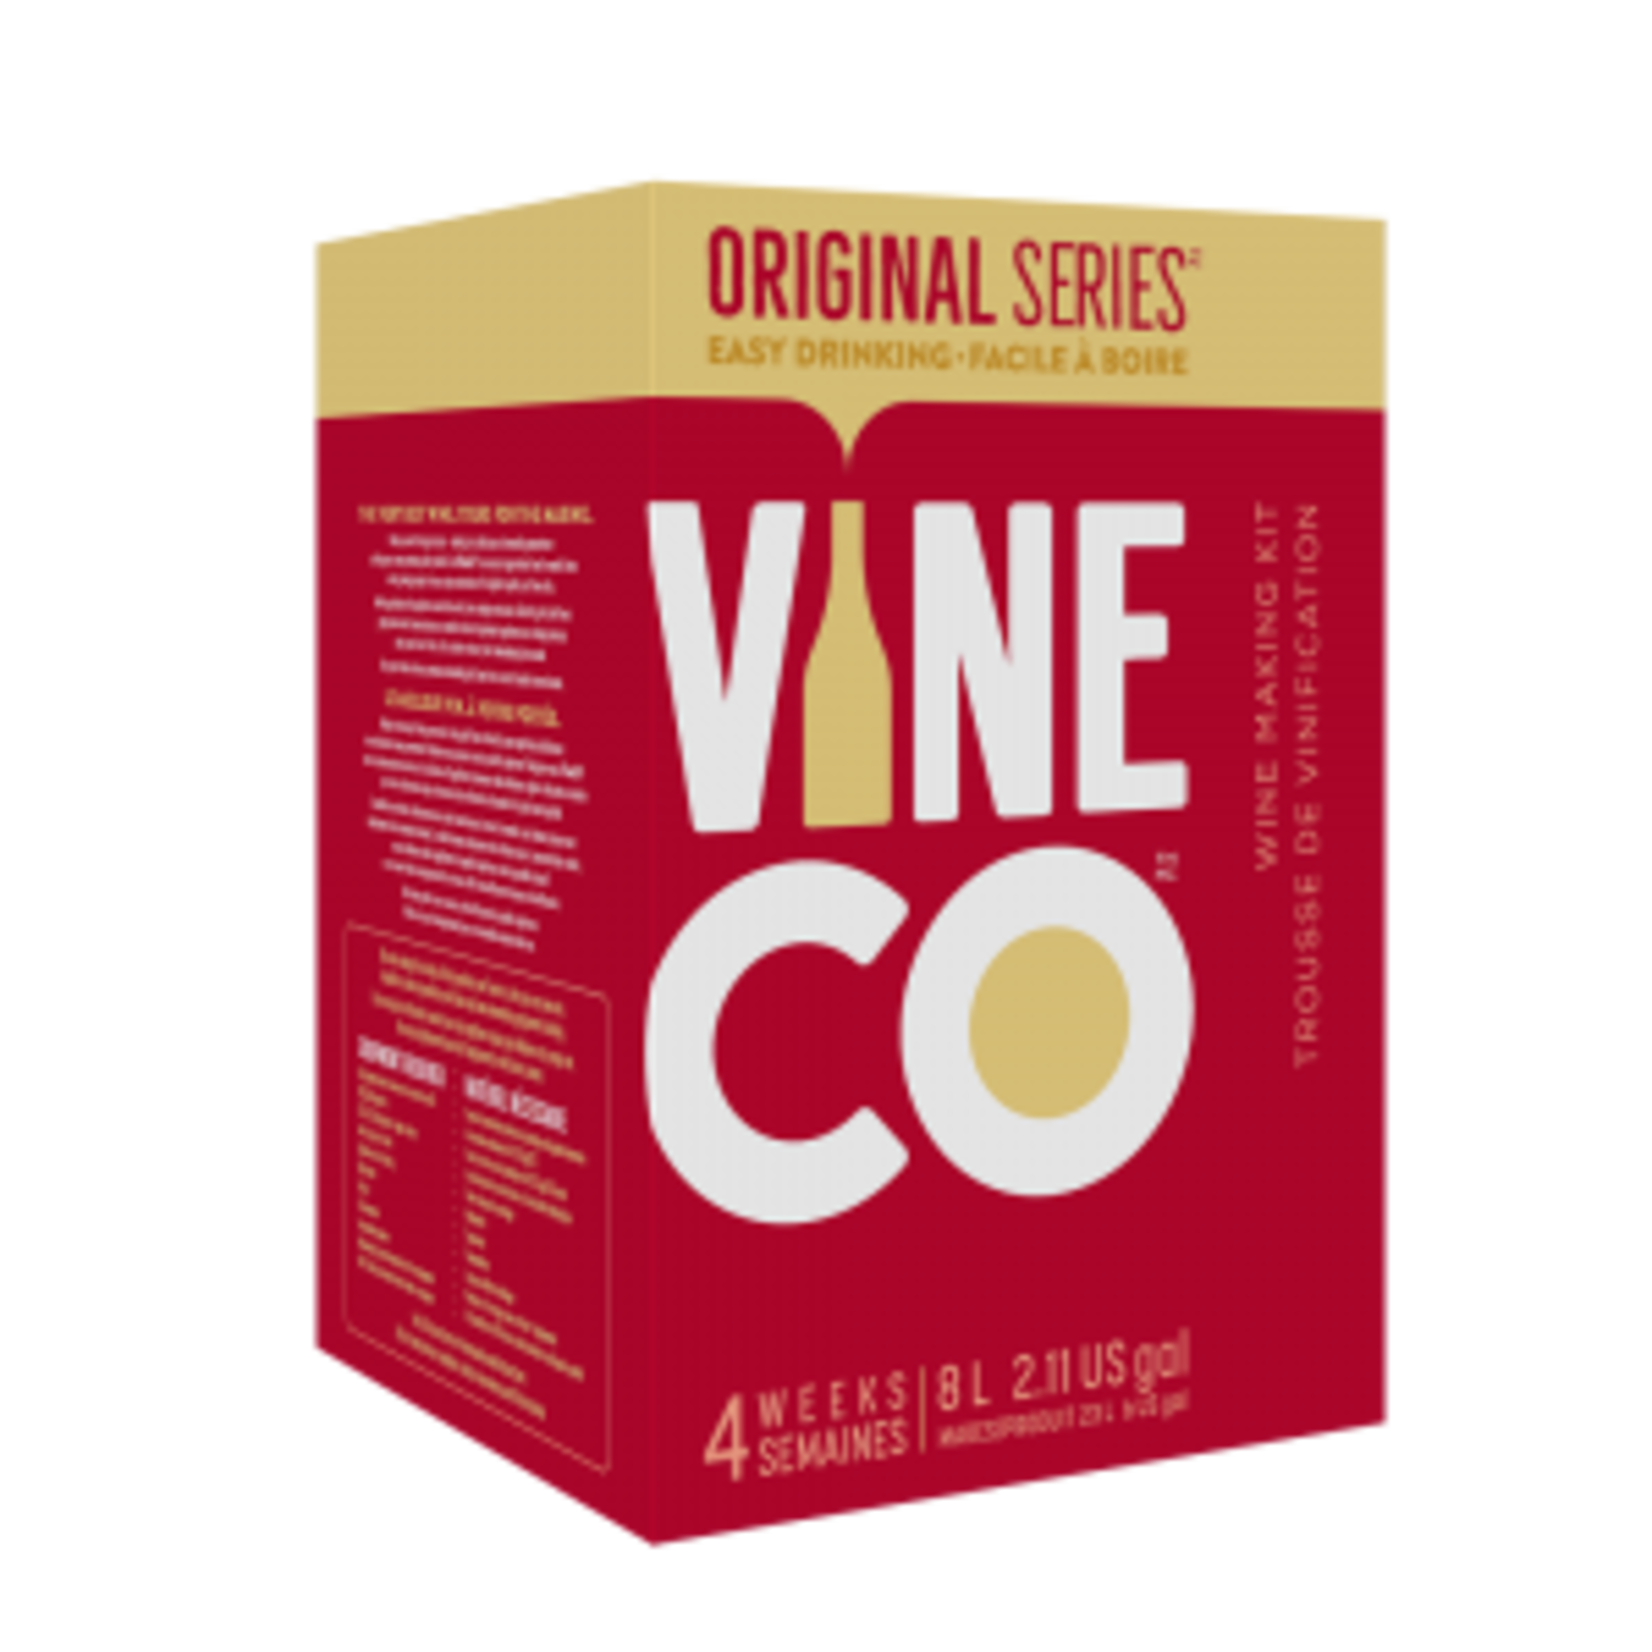 Vine Co. Original Series Viognier (Wine Kit), California